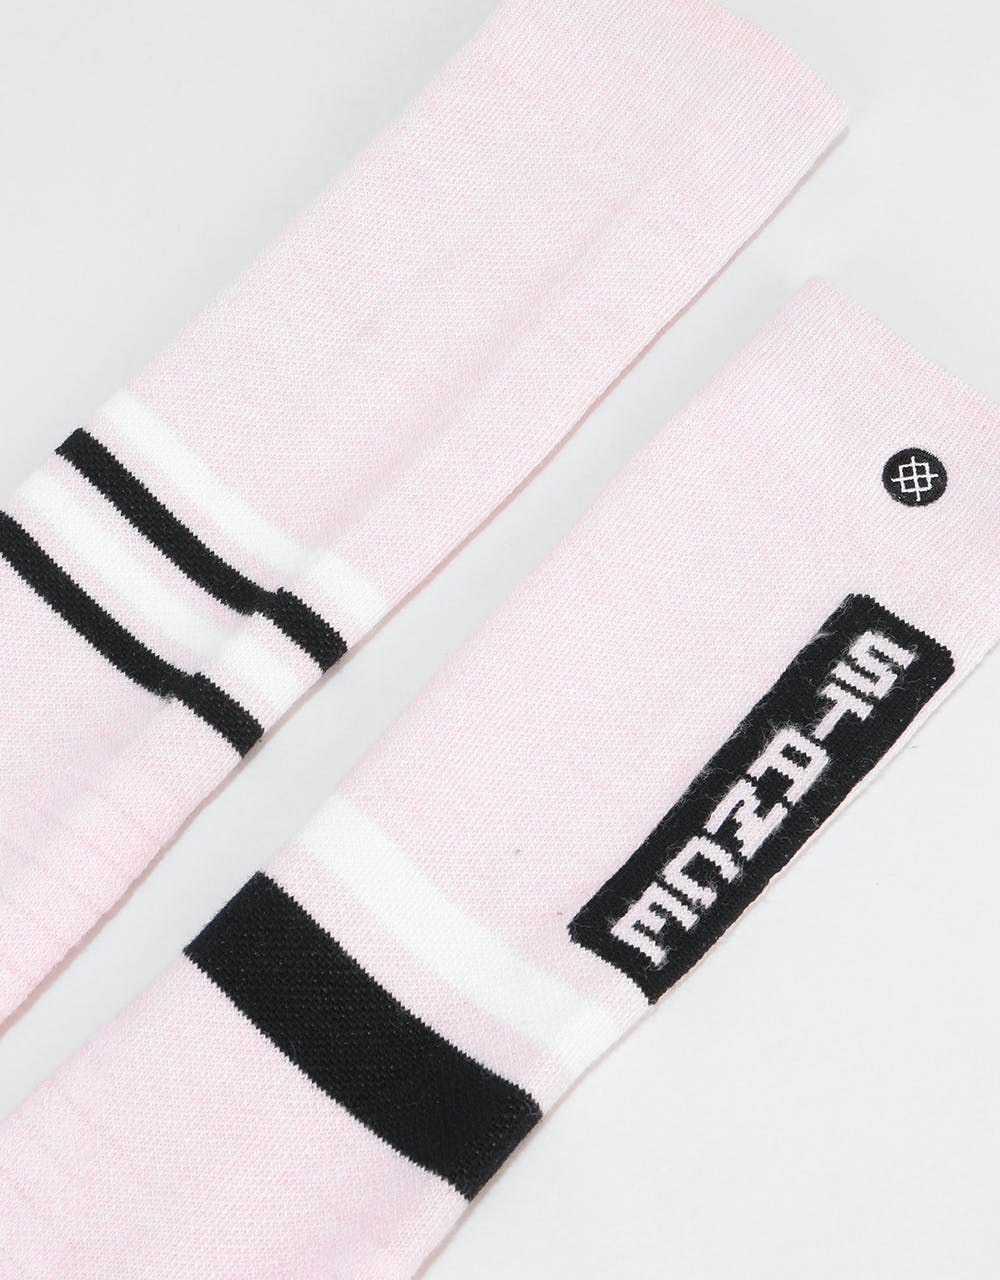 Stance Issue Park Snowboard Socks - Pink